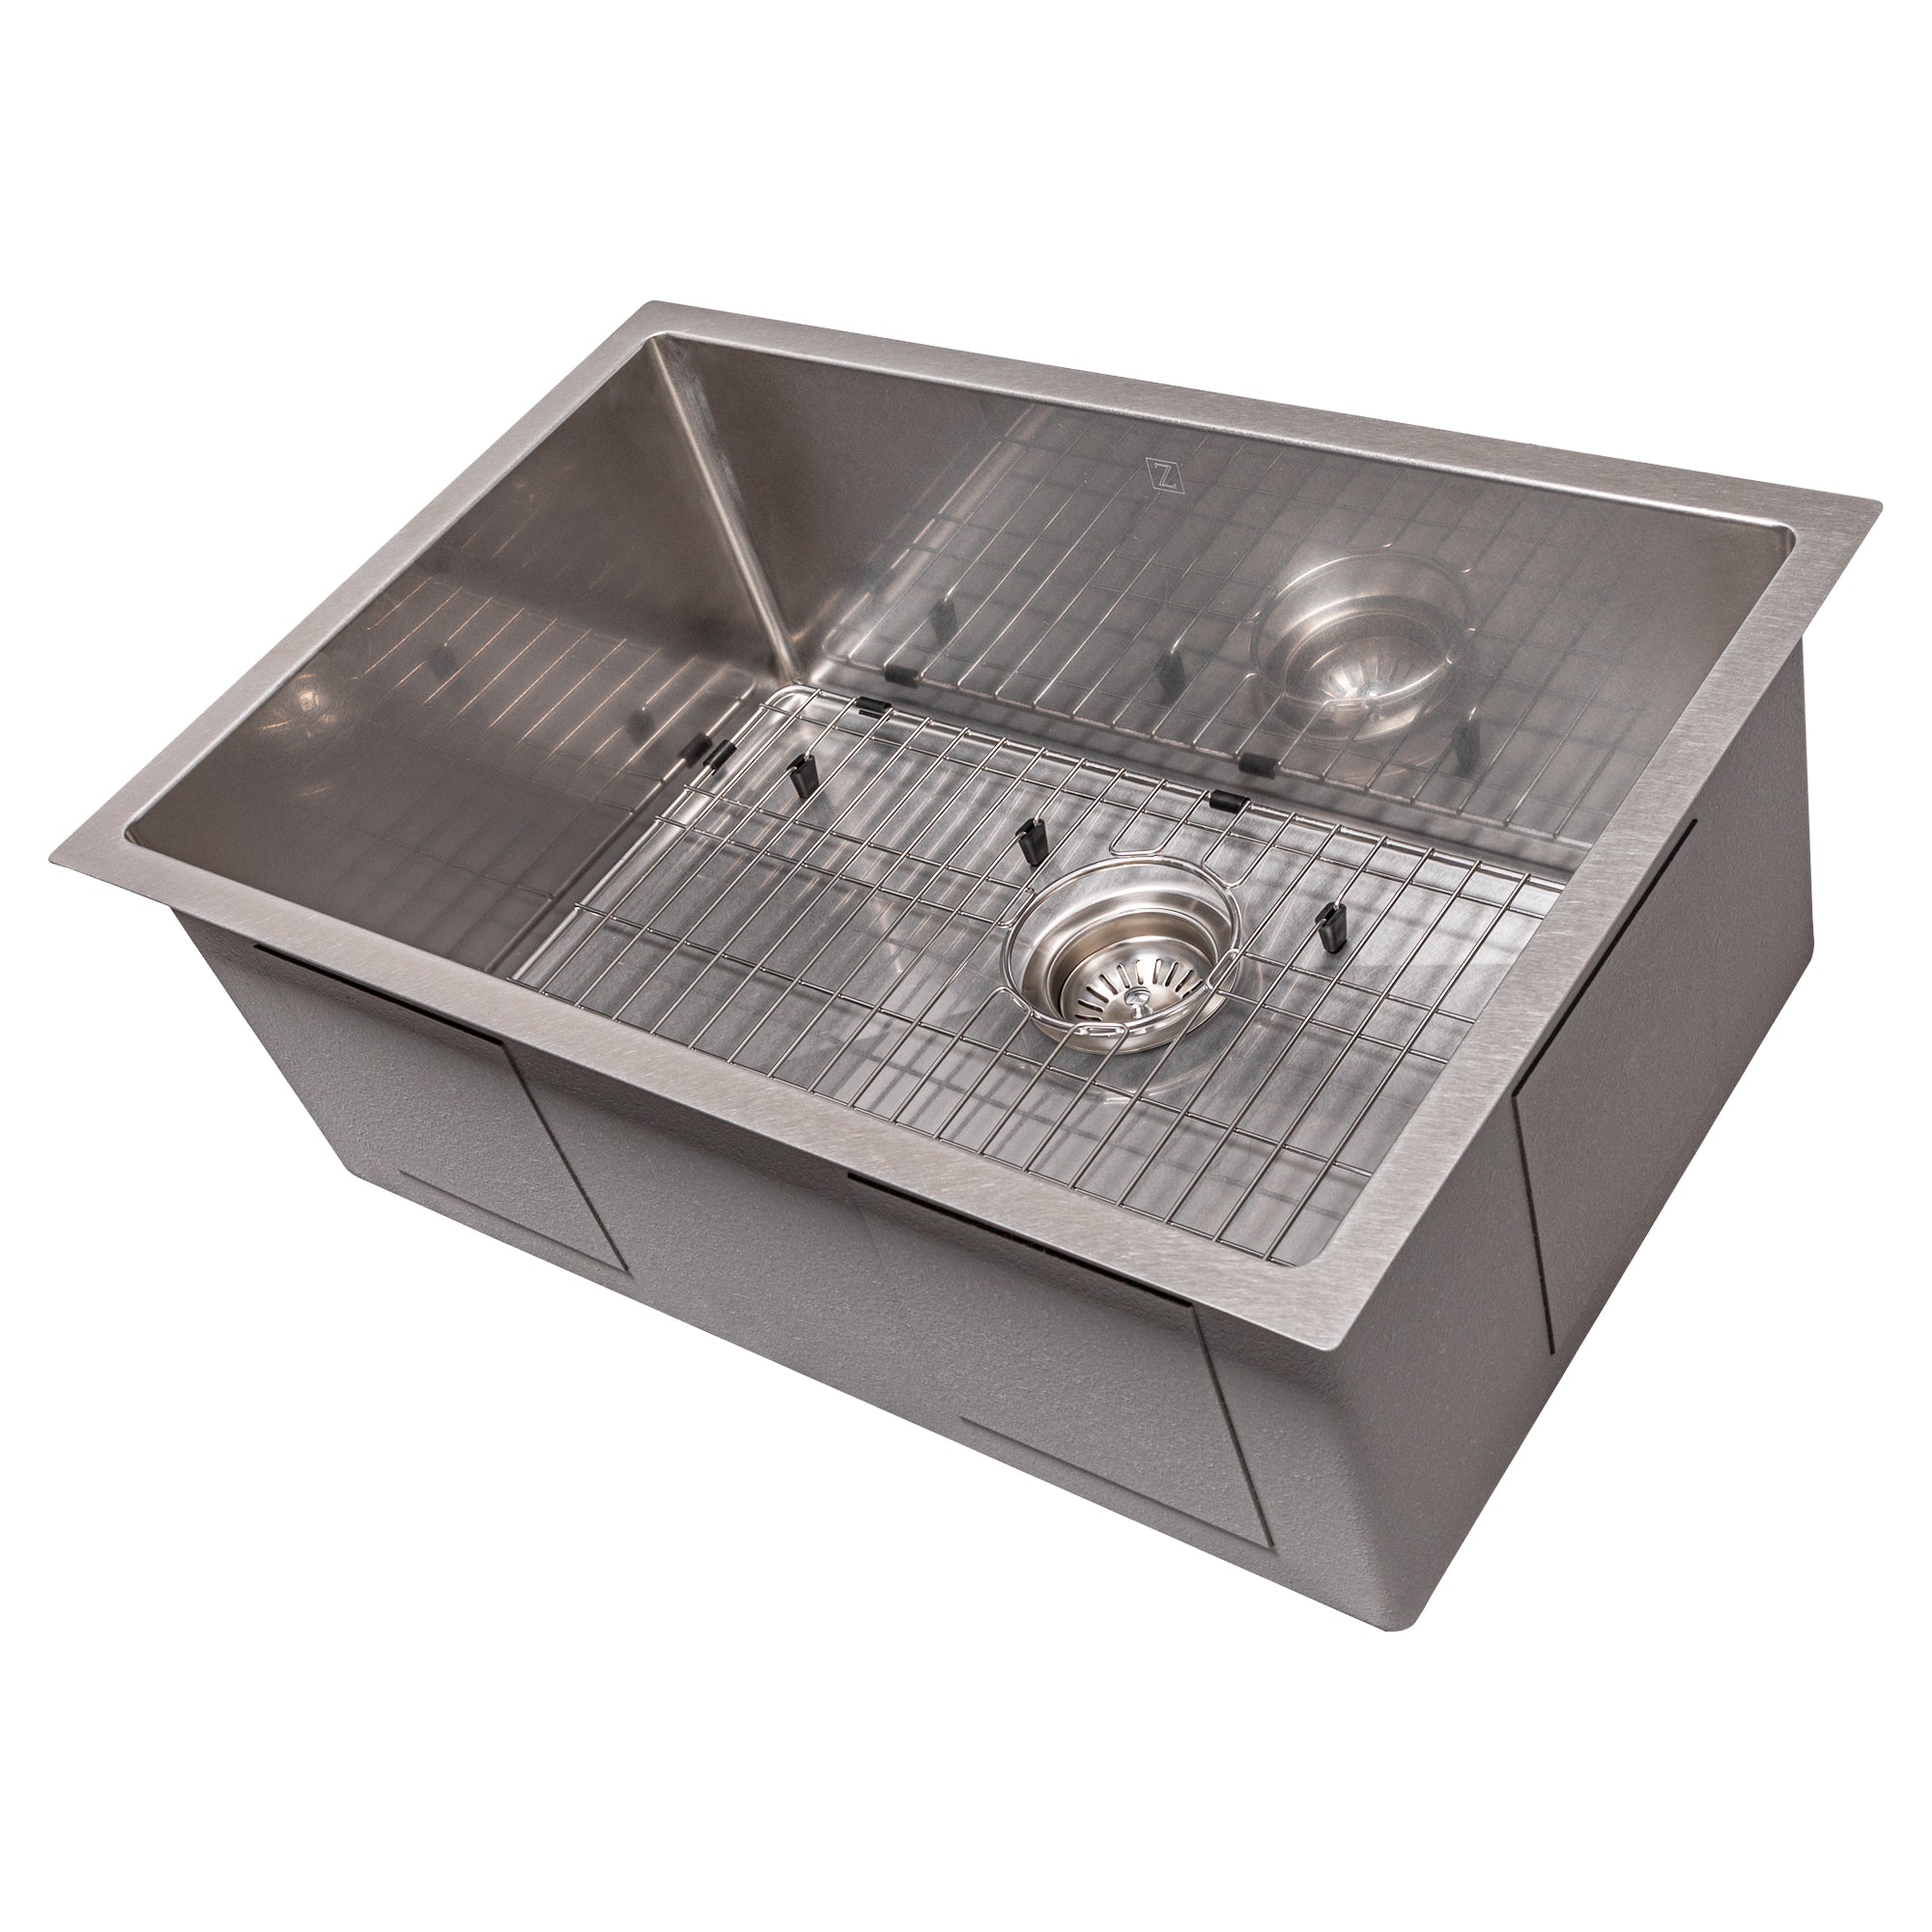 ZLINE 27" Meribel Undermount Single Bowl Fingerprint Resistant Stainless Steel Kitchen Sink with Bottom Grid (SRS-27S)